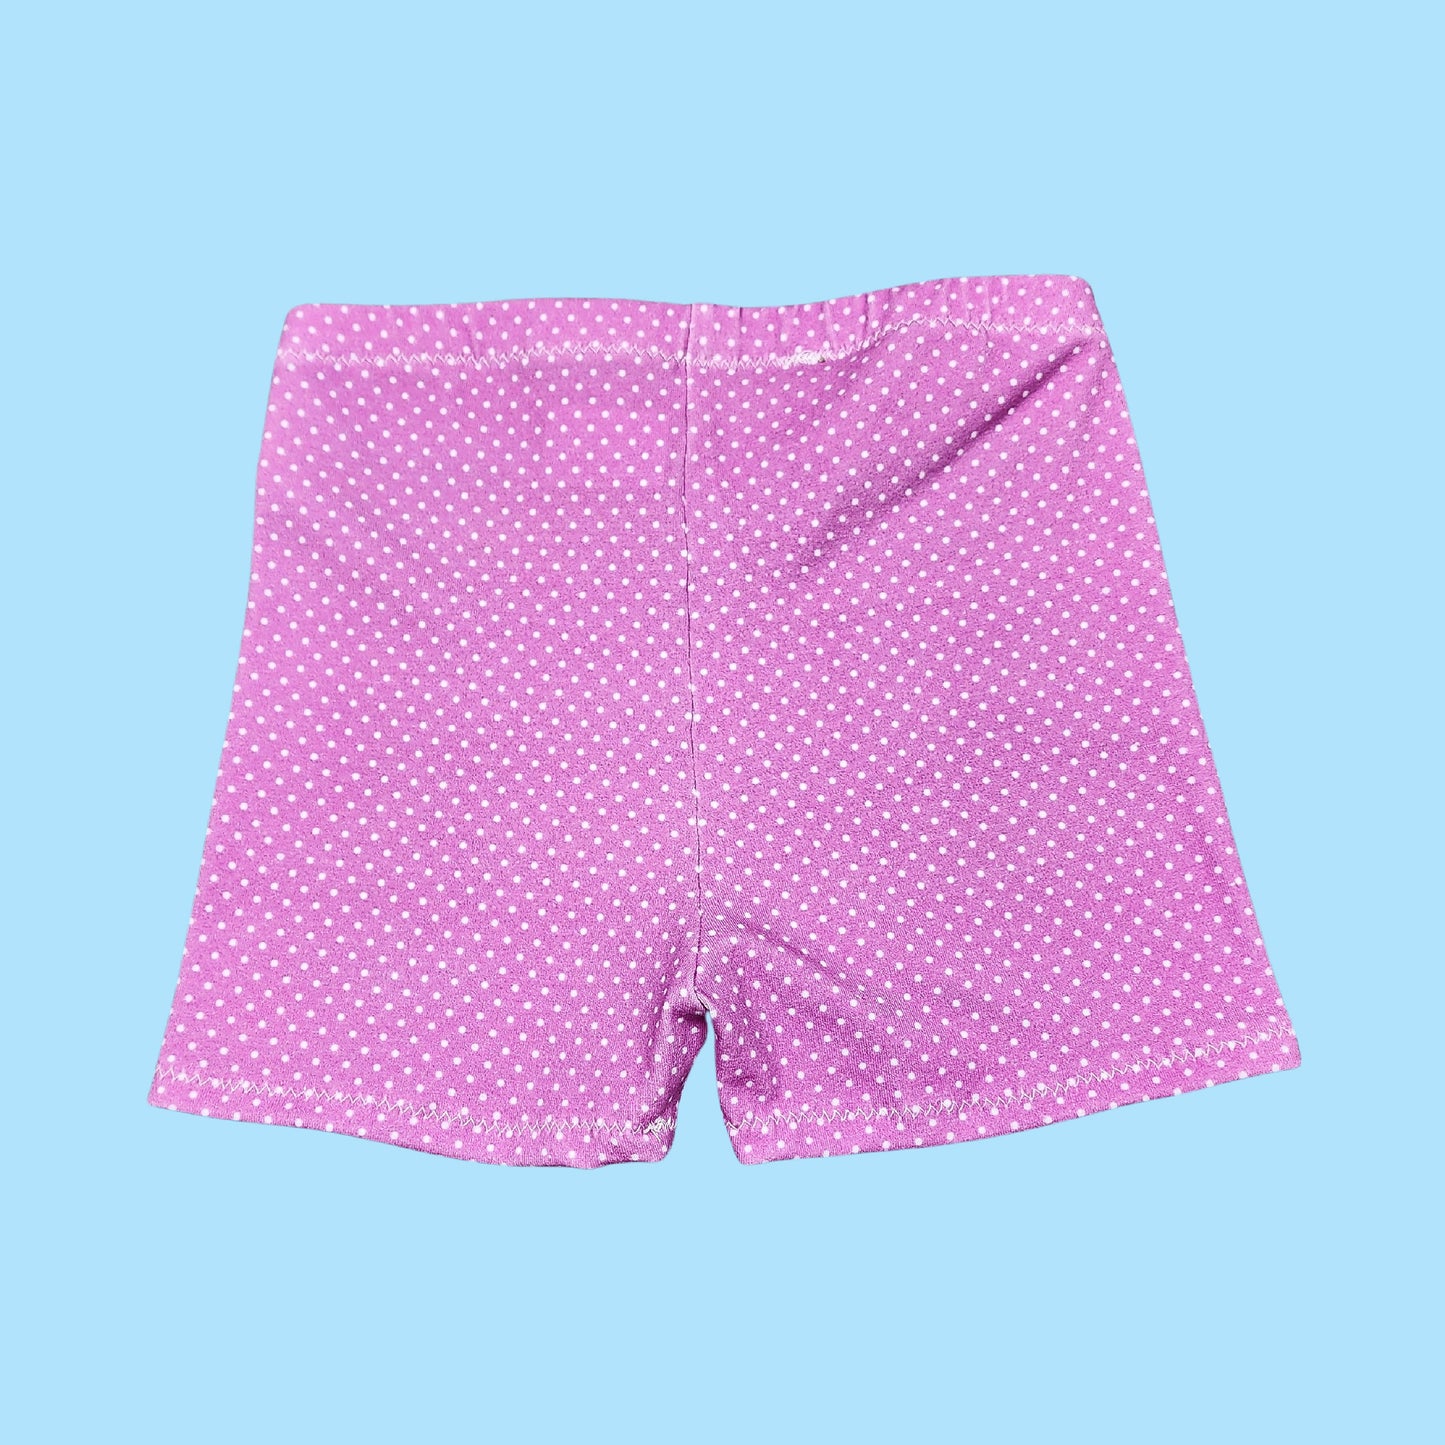 Pastel Mint Ice Cream Bike Shorts for Girls